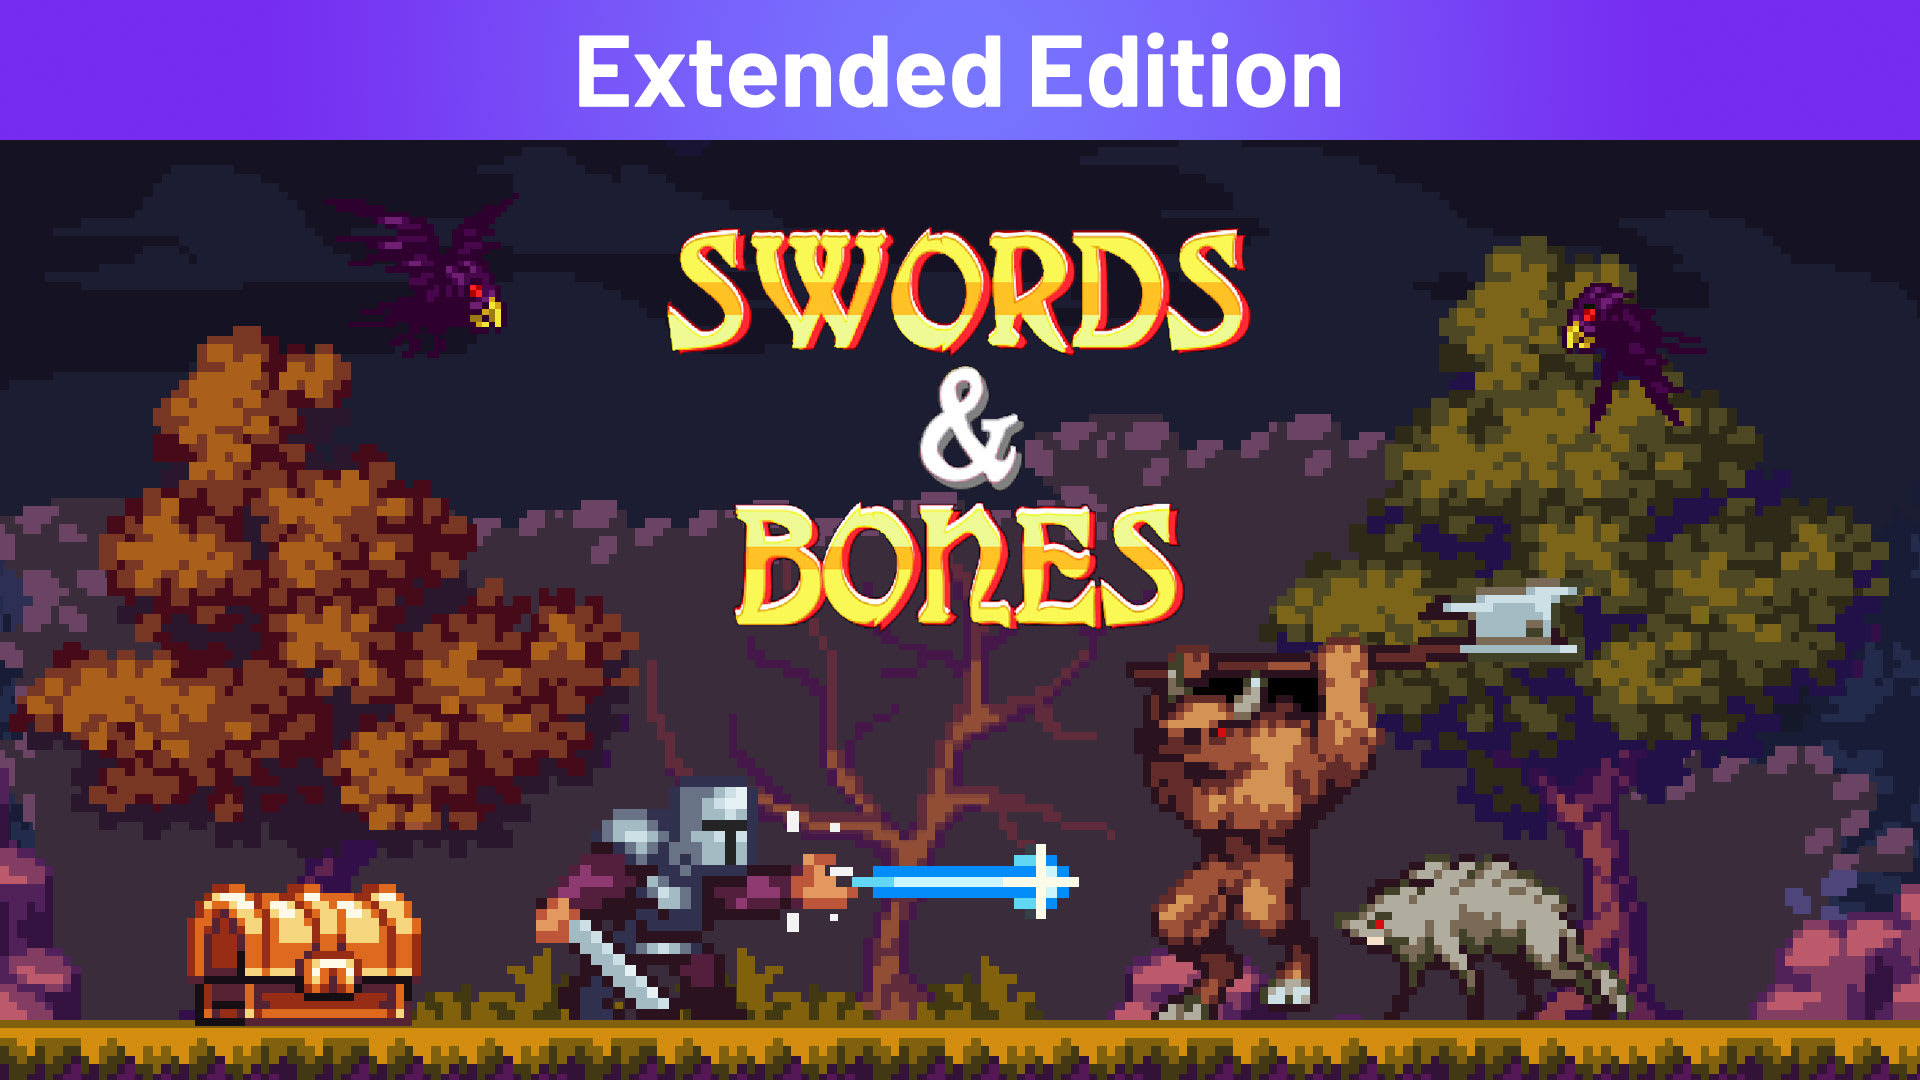 Swords & Bones Extended Edition